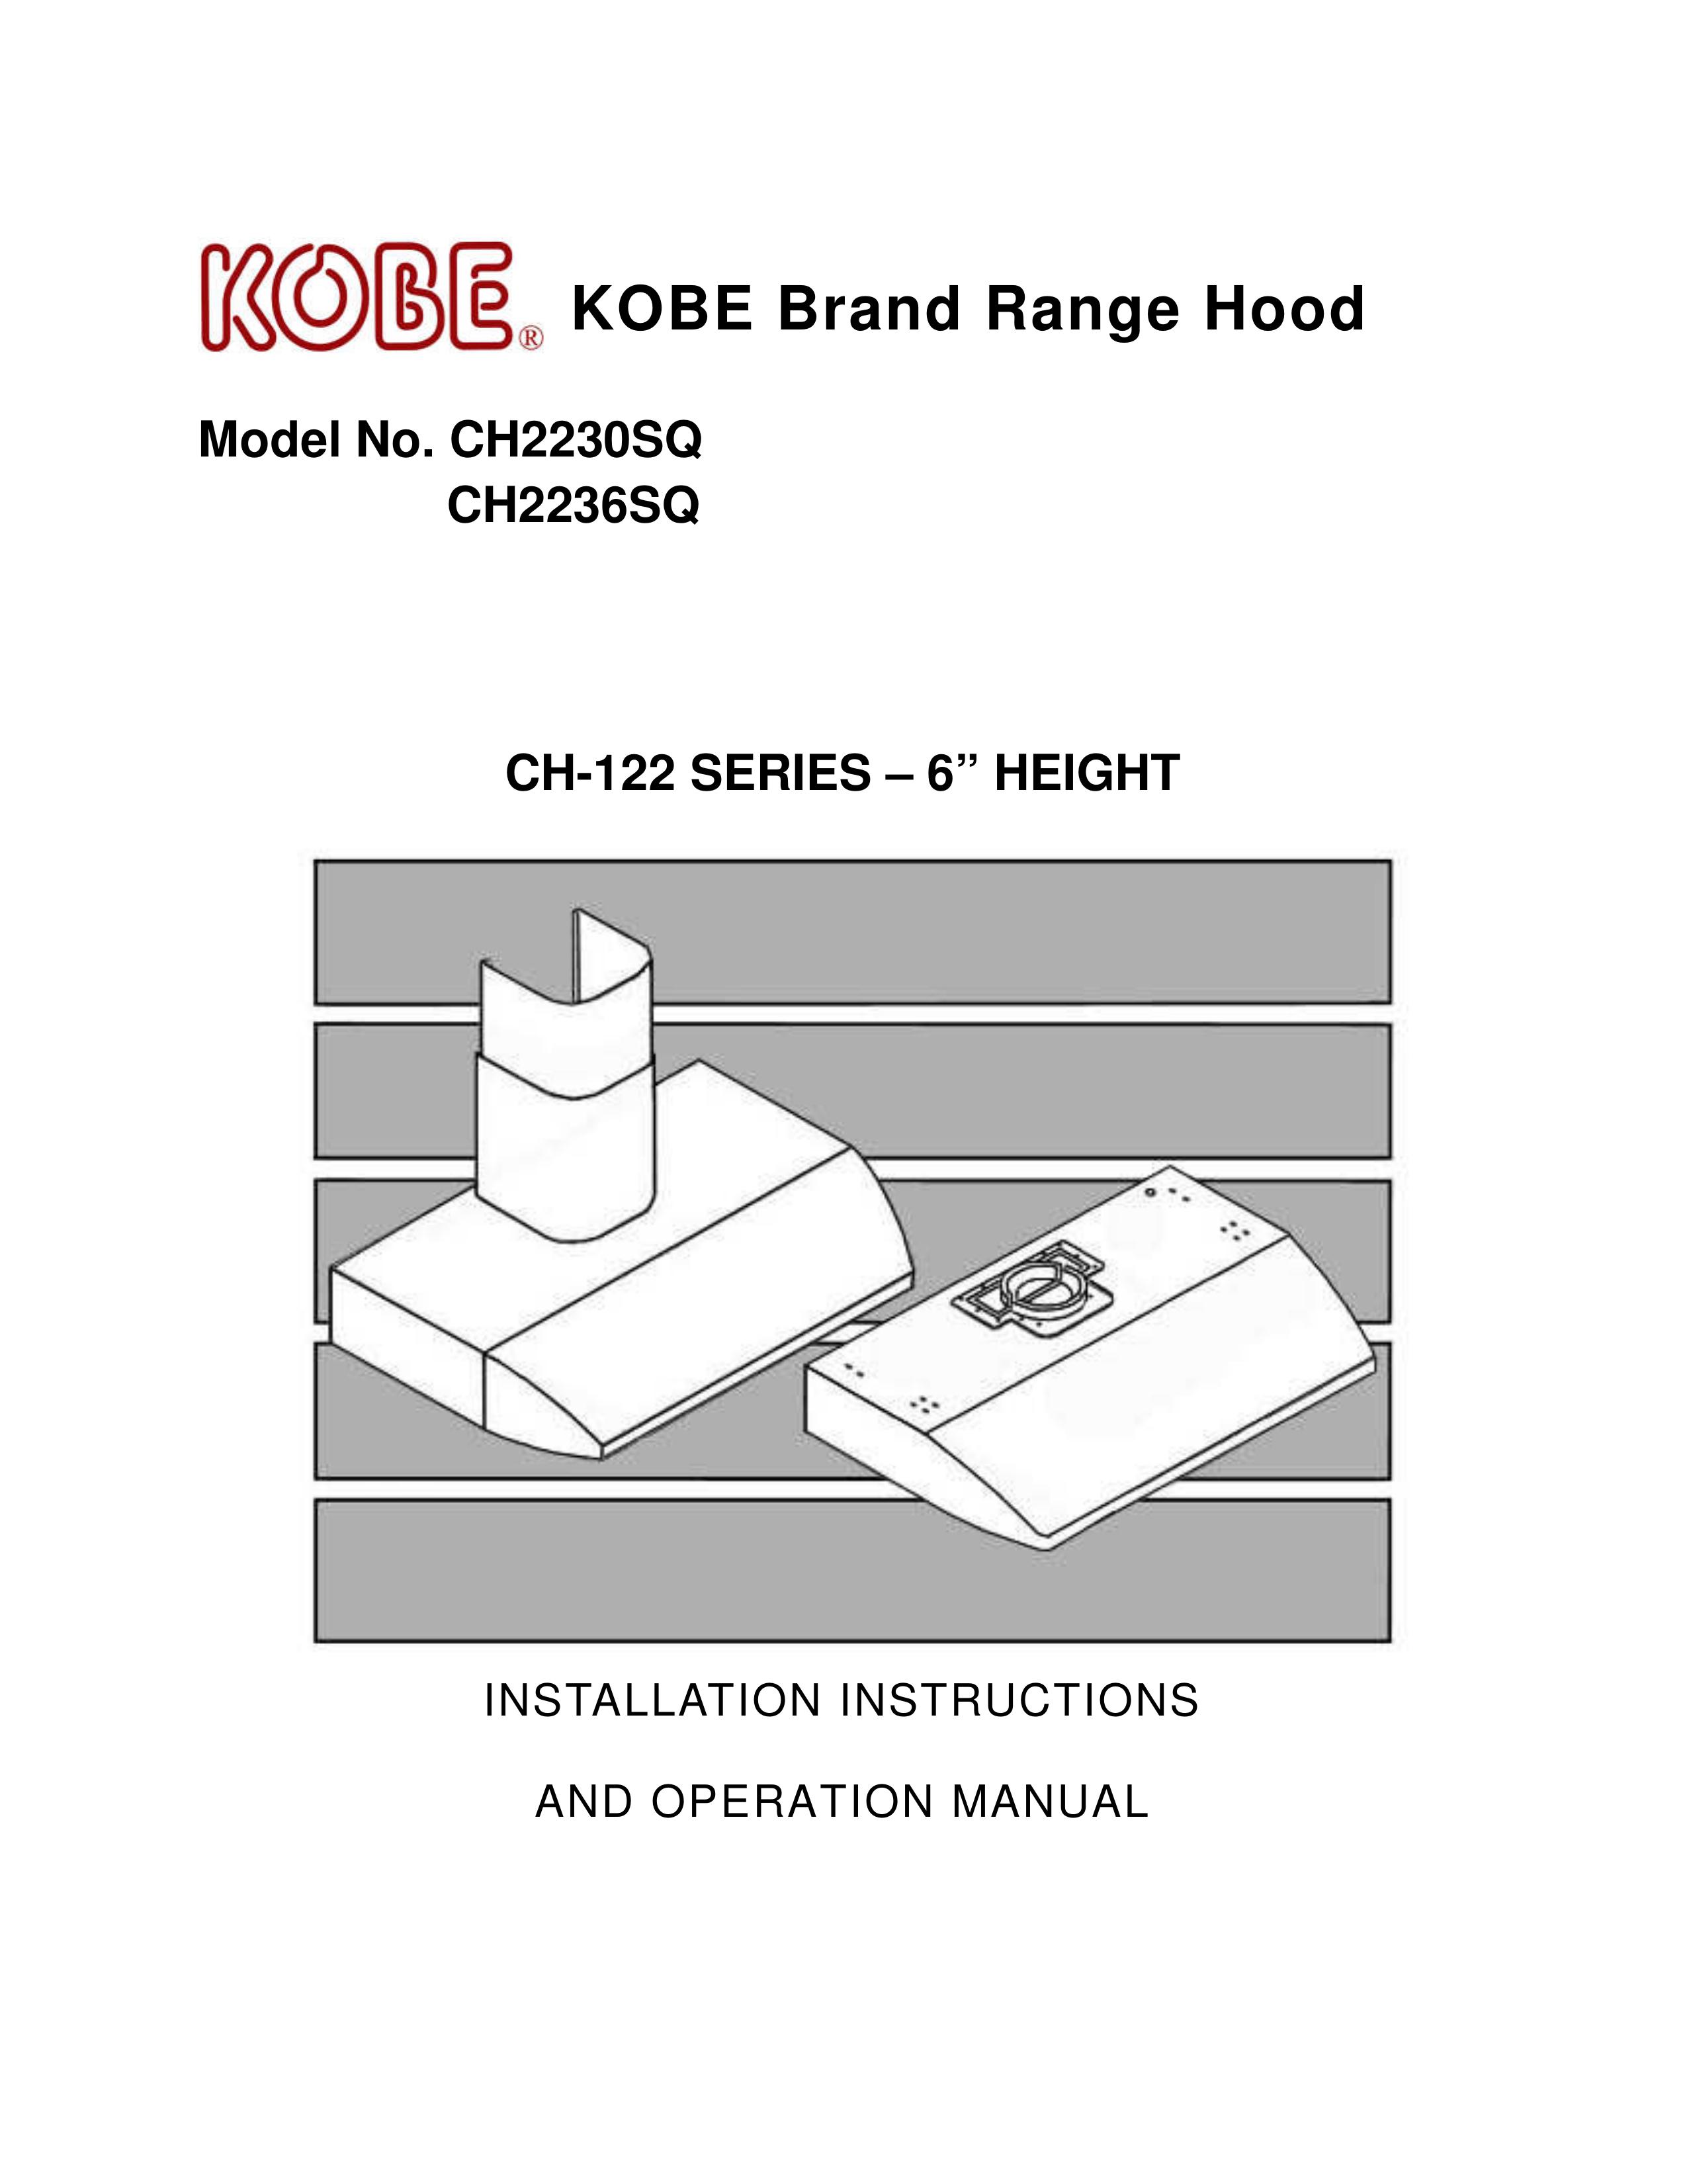 Kobe Range Hoods CH2236SQ Ventilation Hood User Manual